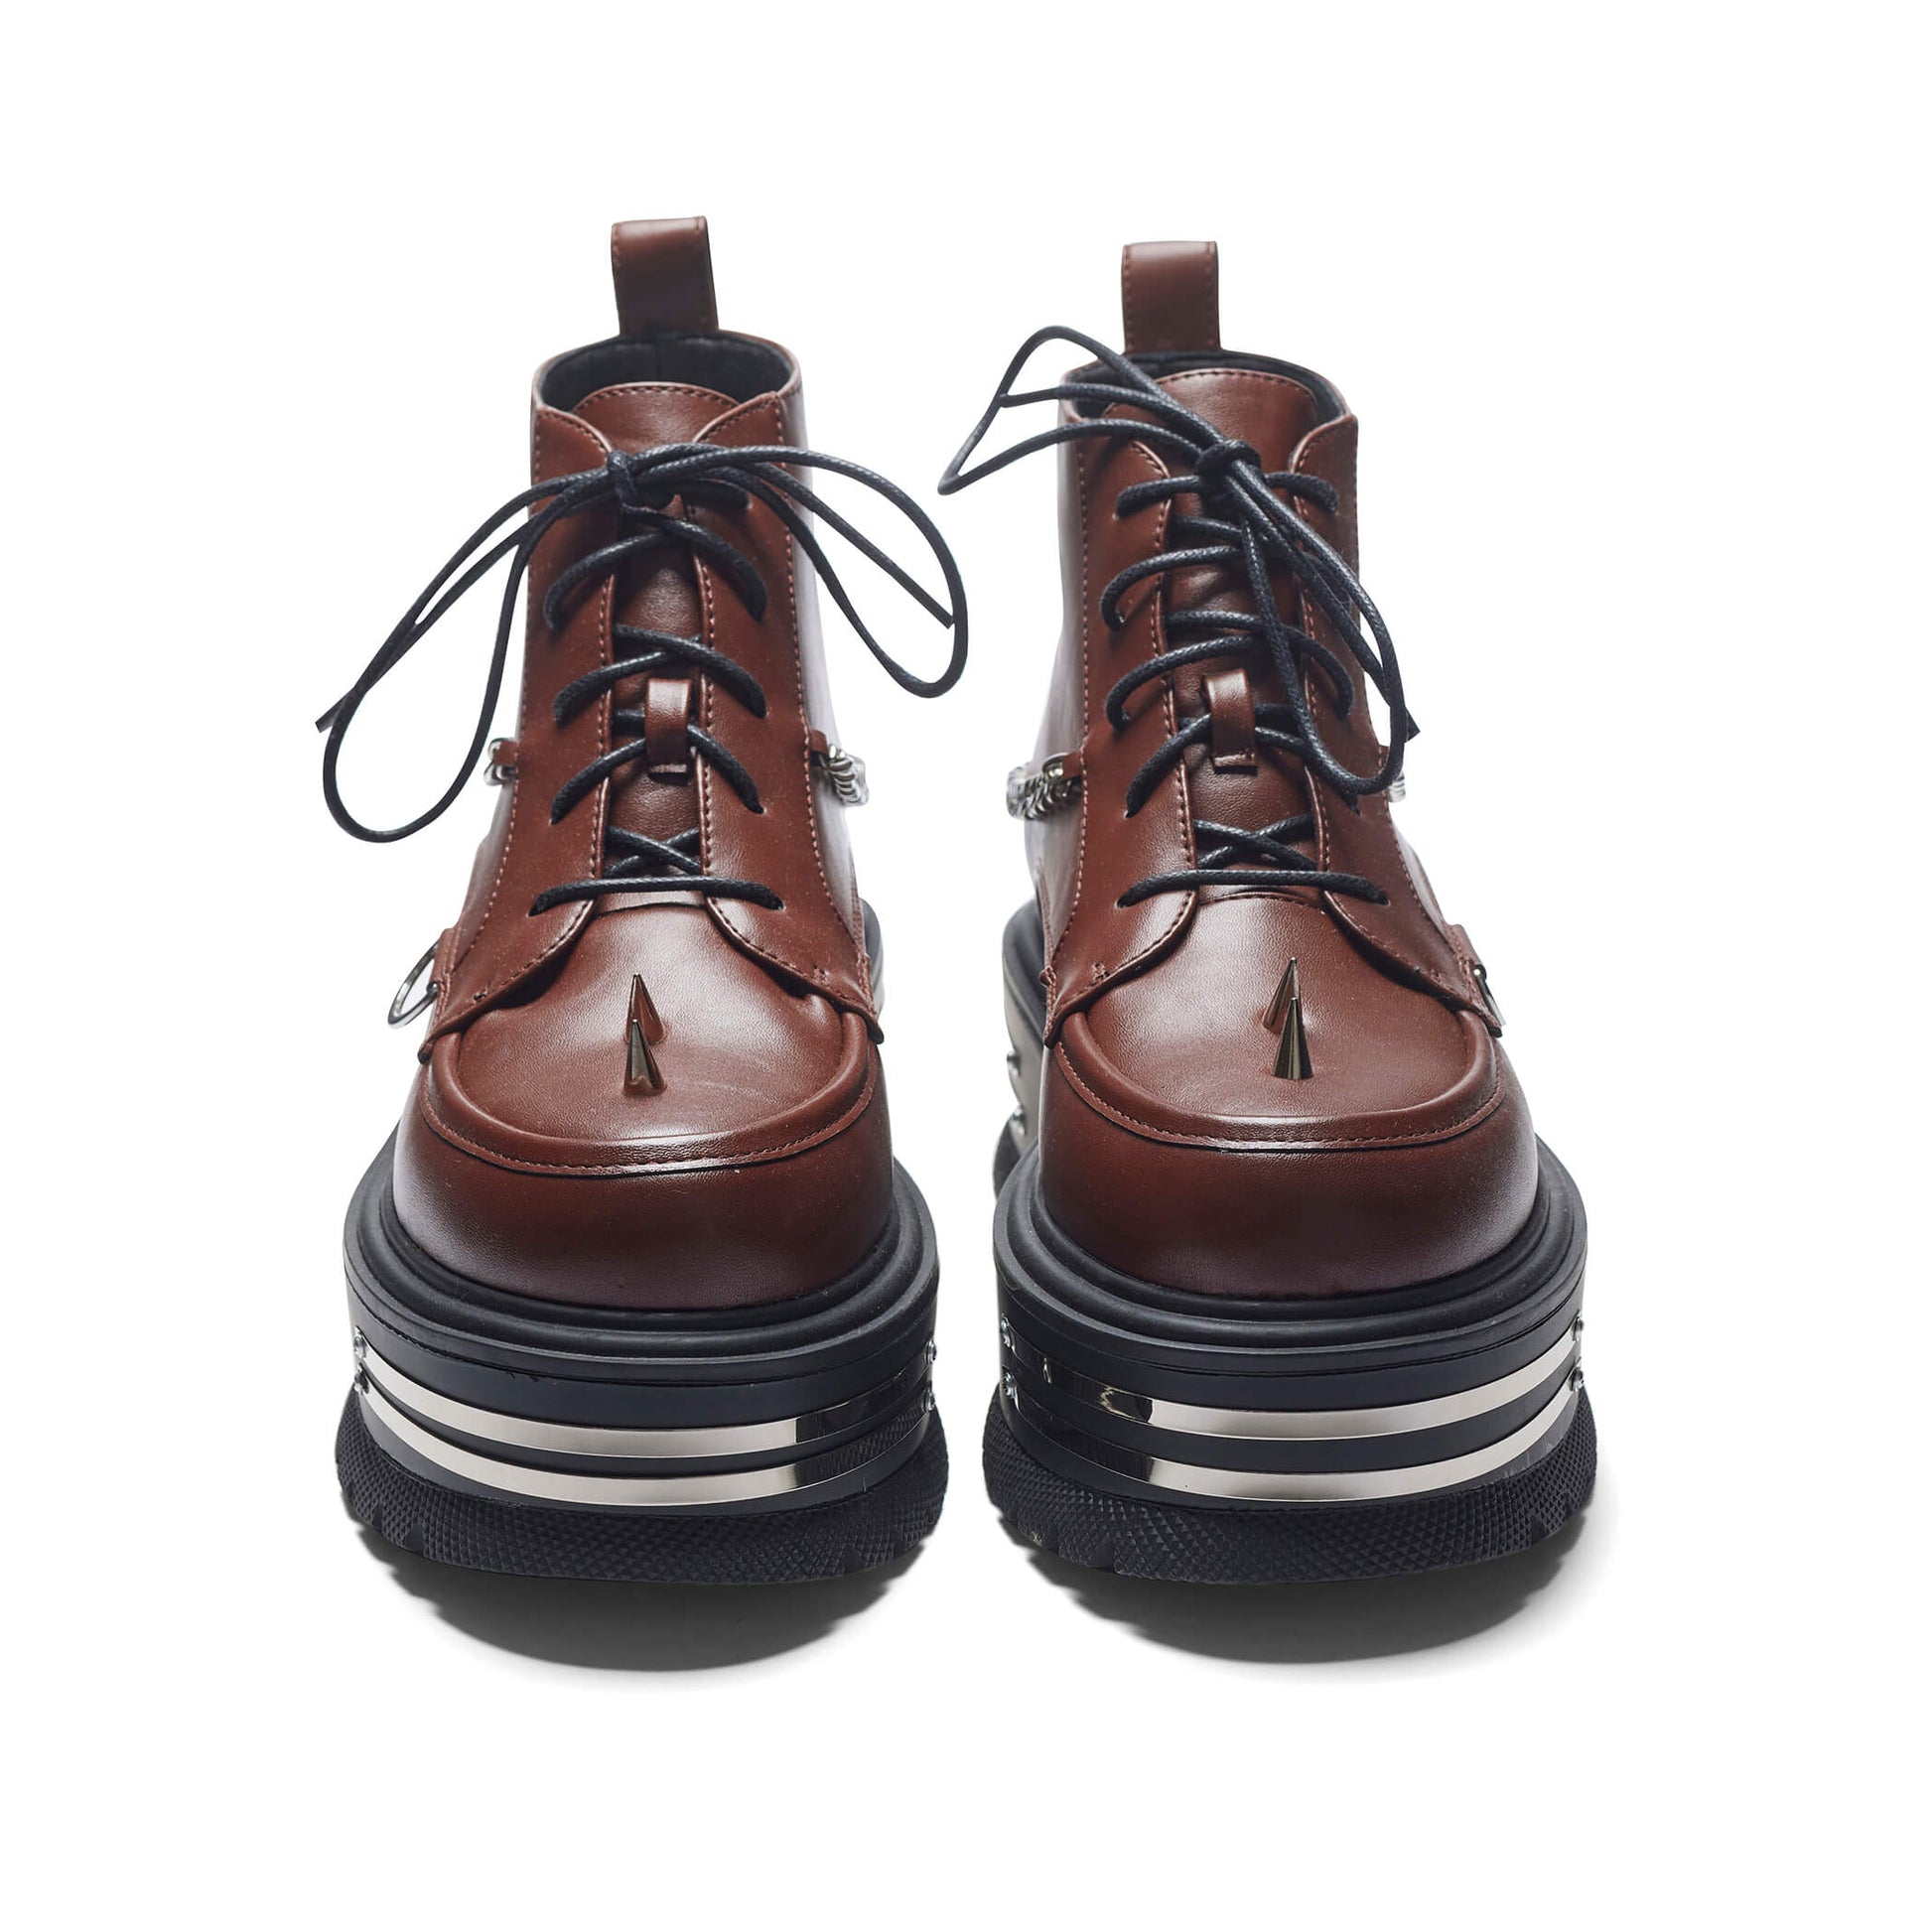 The Silence Men's Platform Grunge Boots - Brown - Koi Footwear - Front View